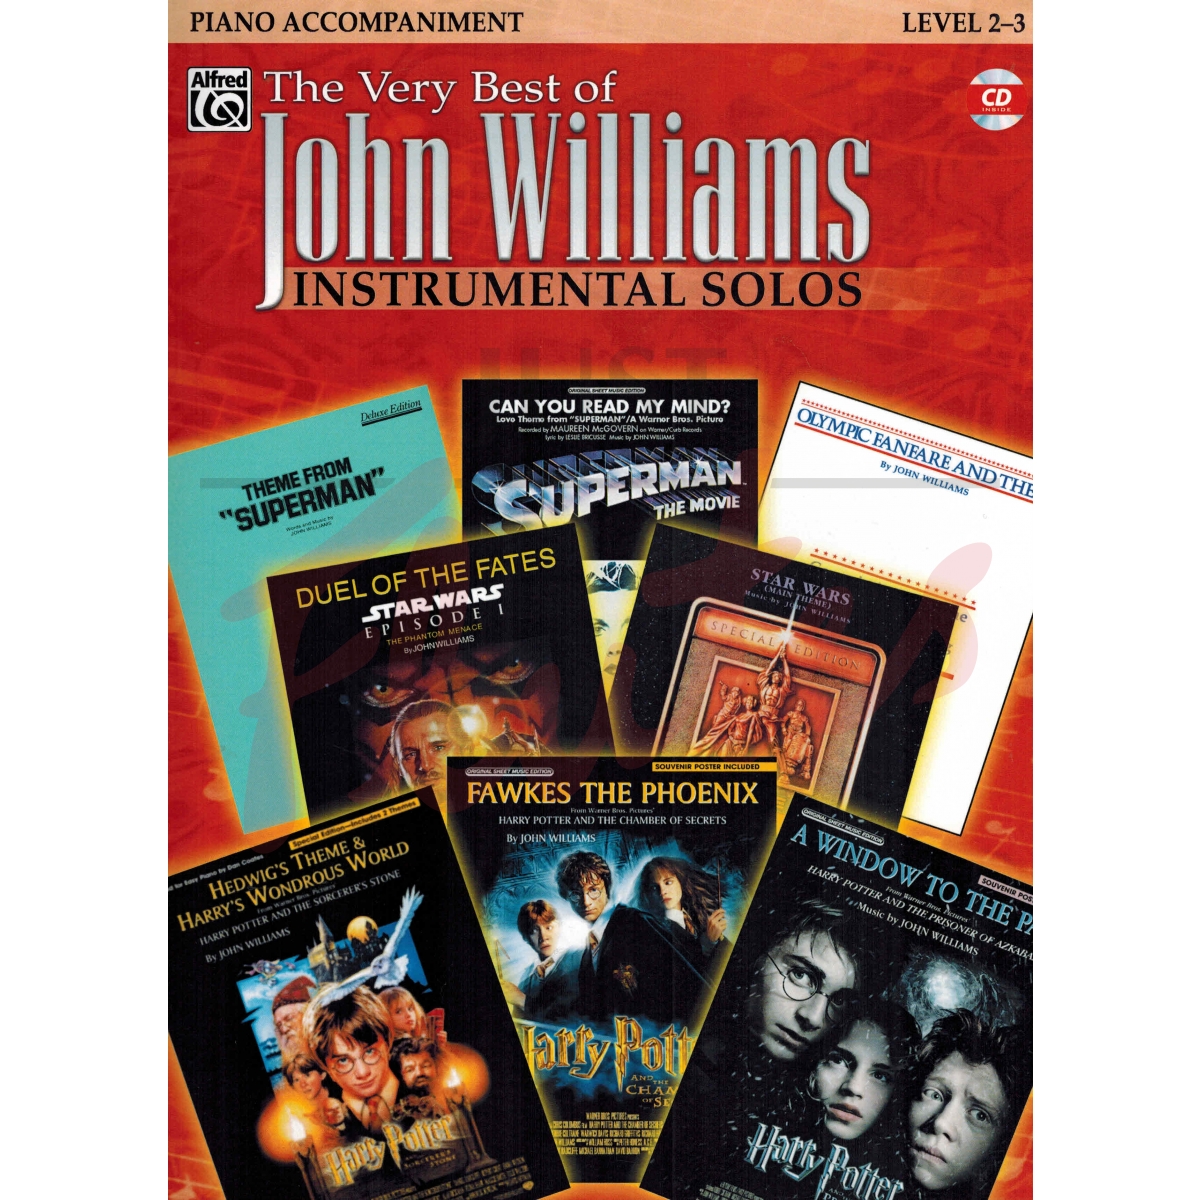 The Very Best of John Williams [Piano accompaniment]